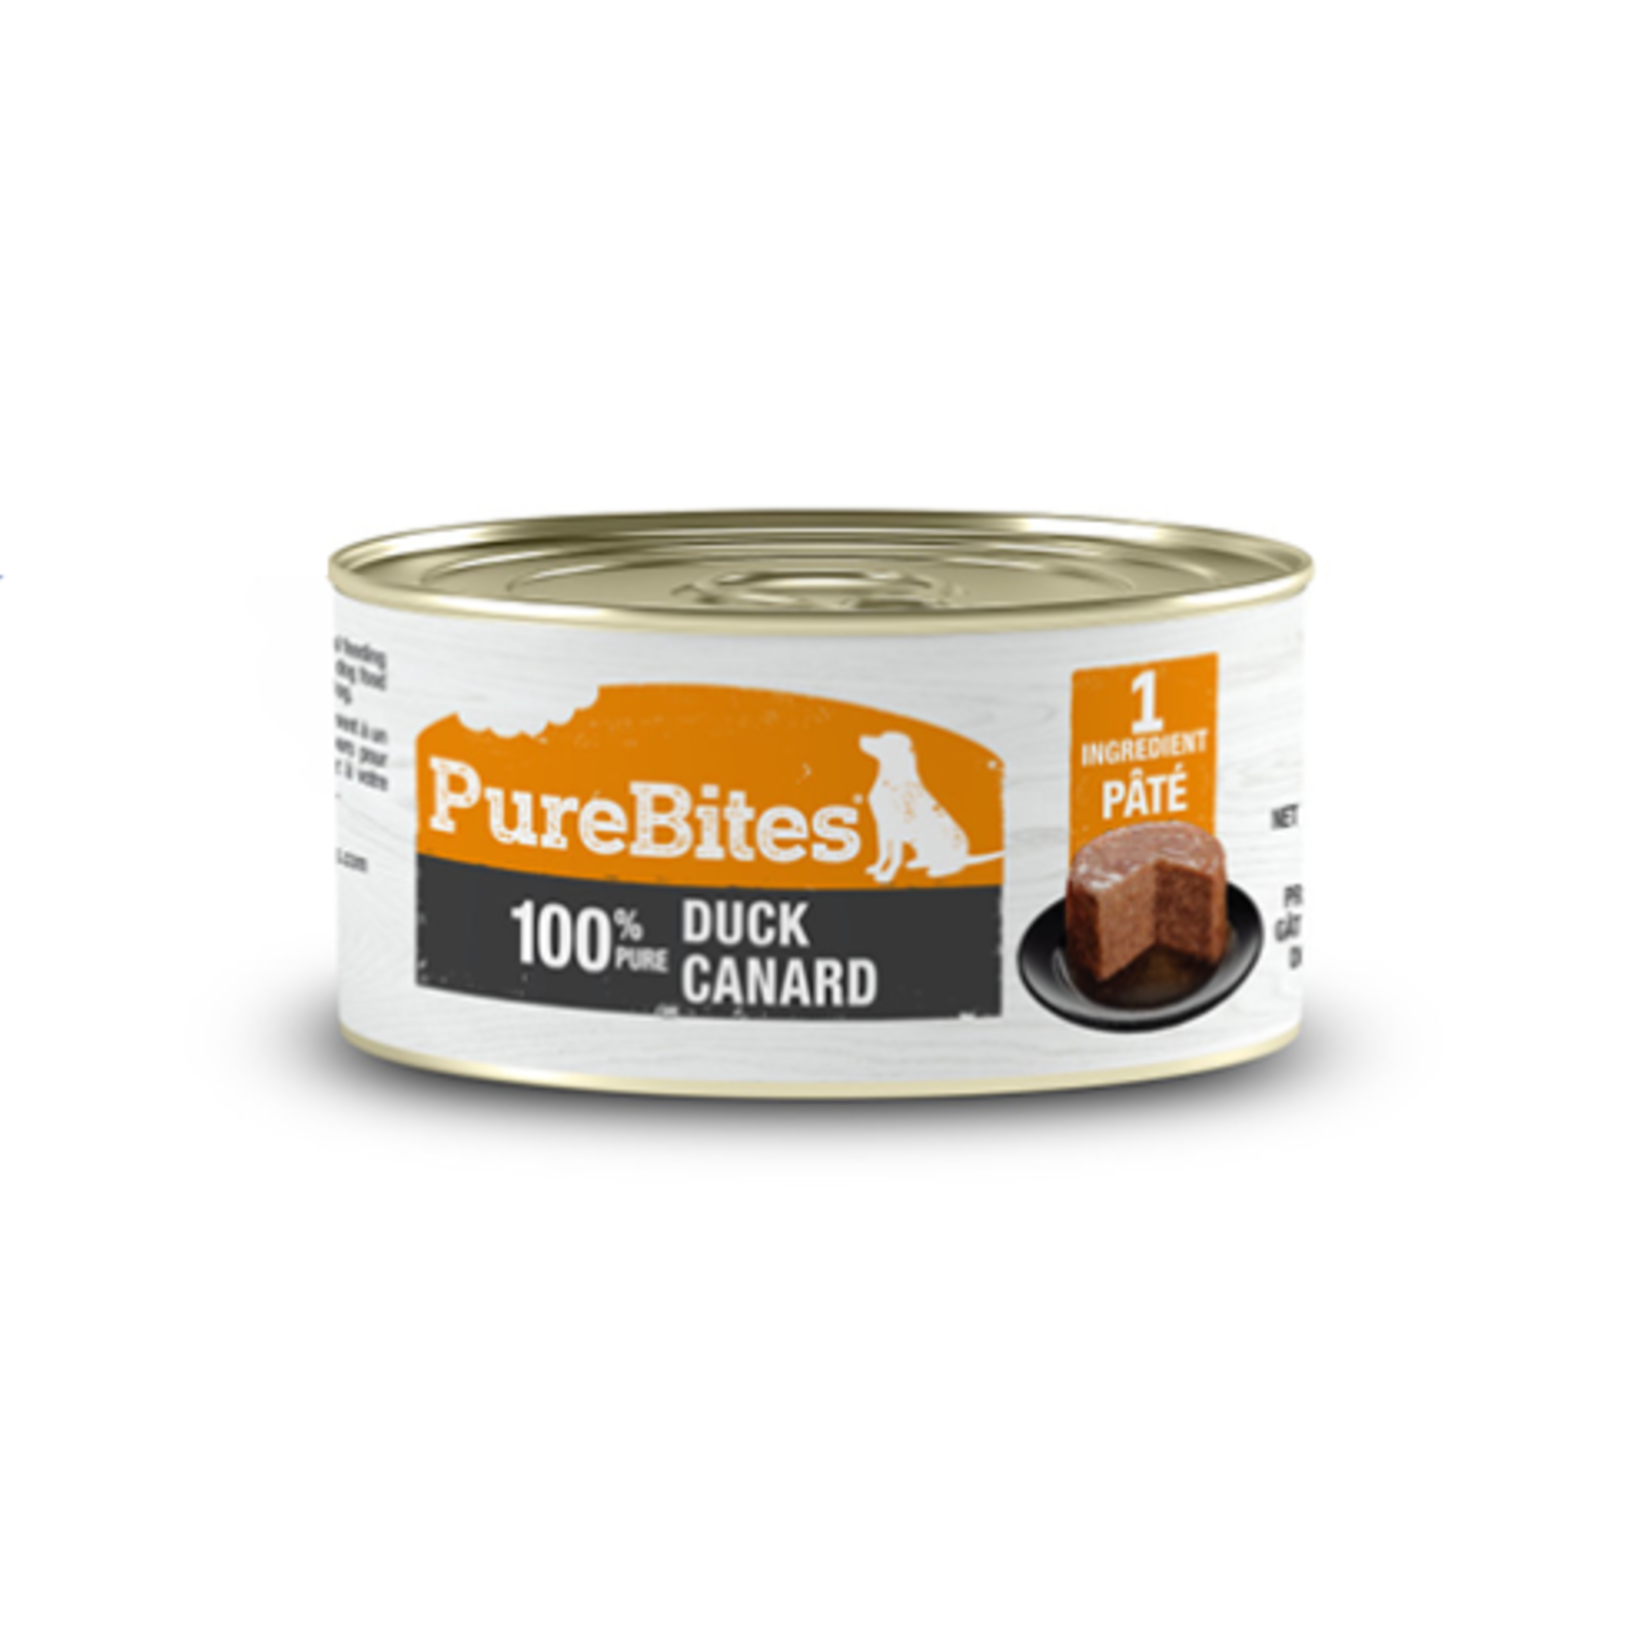 PureBites Pâté - 100% Pur Canard - 2.5 oz